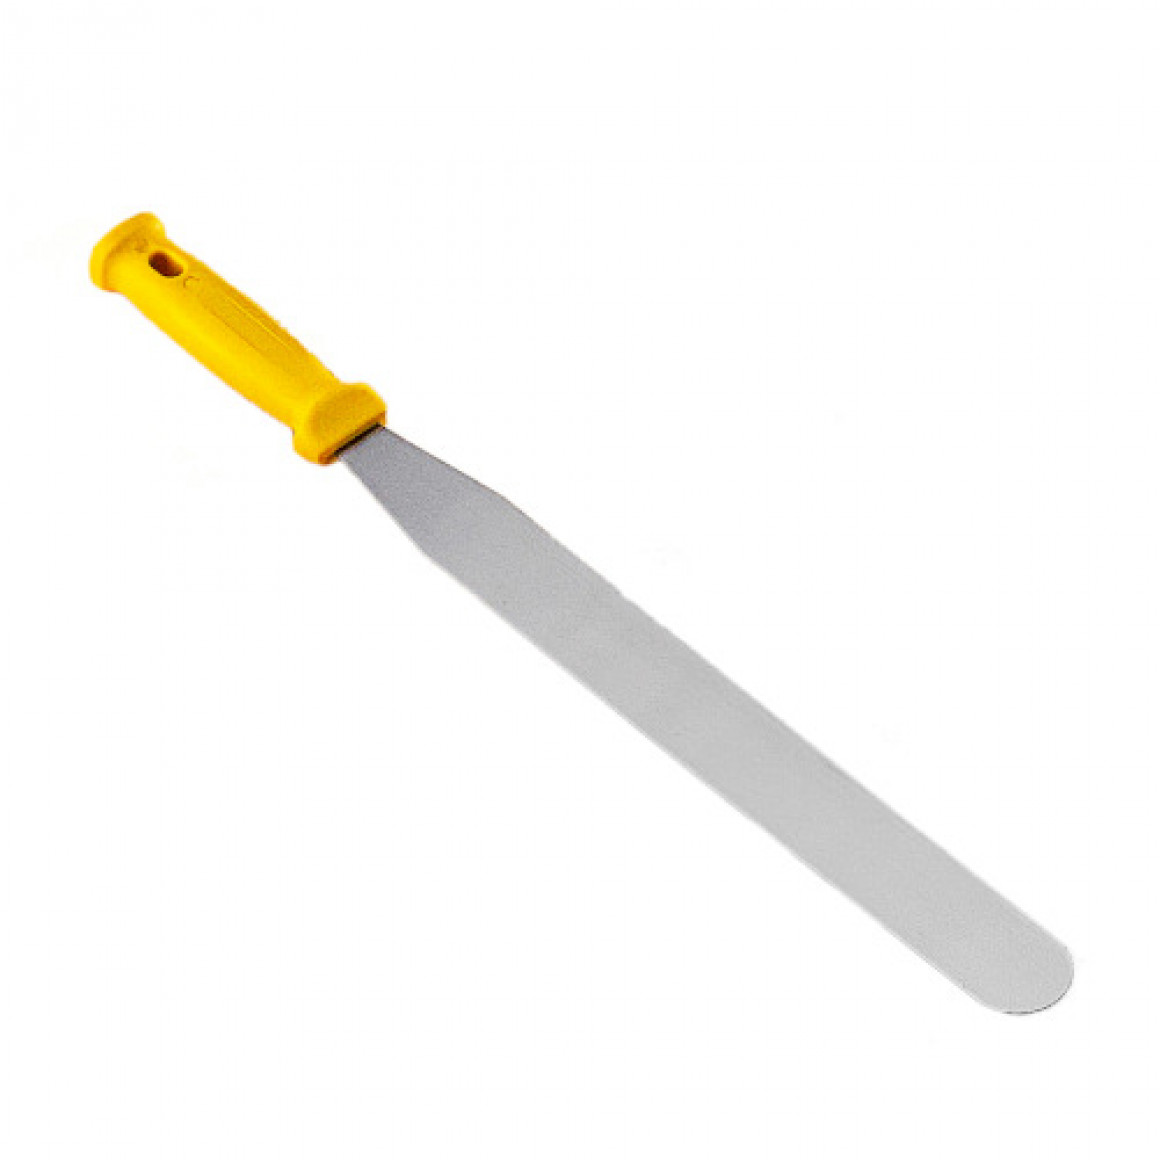 Stainless steel flexible spatula